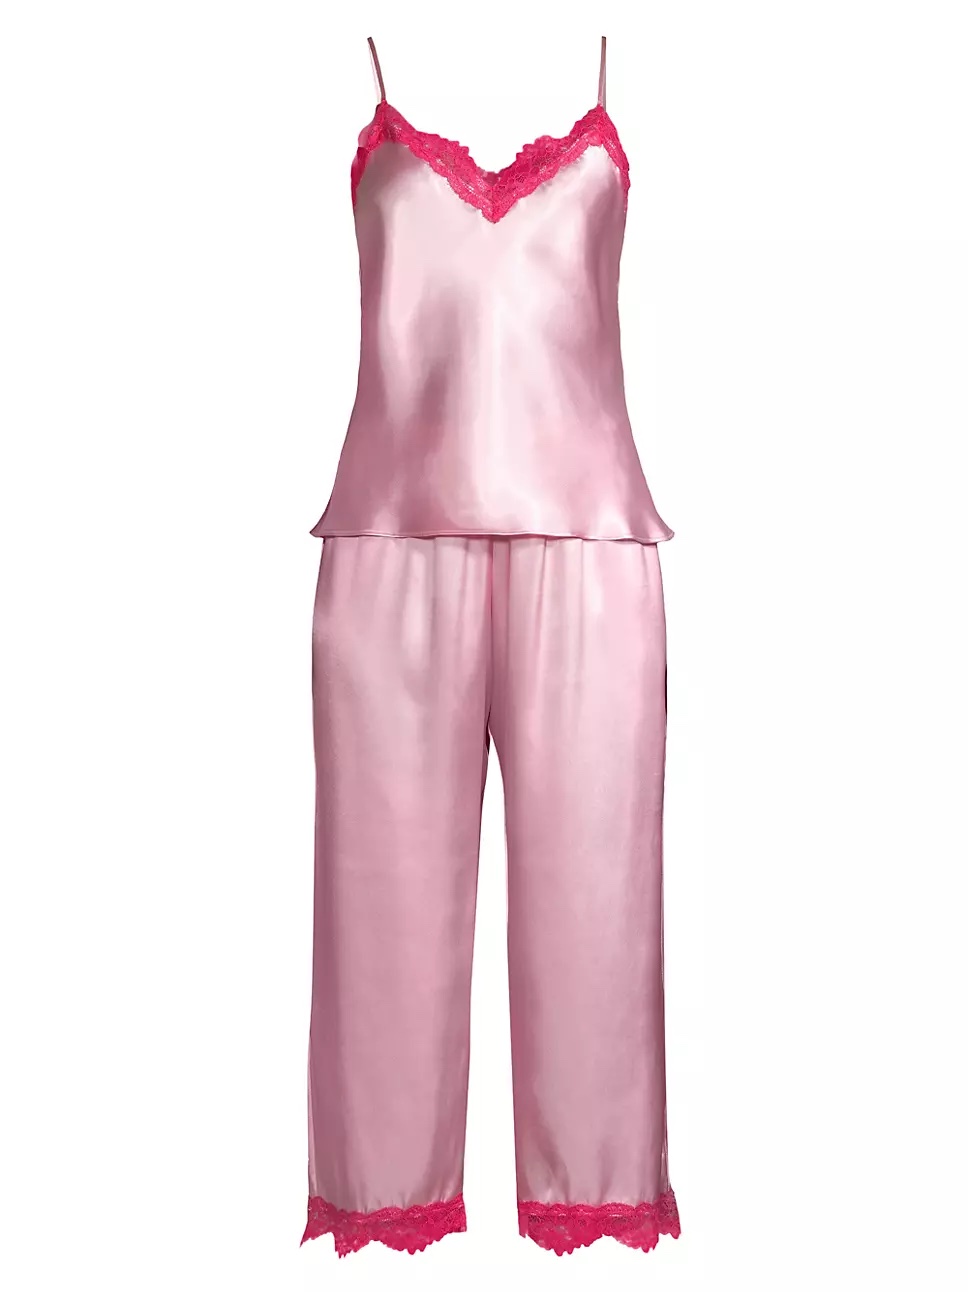 satin lingerie pajama set pink